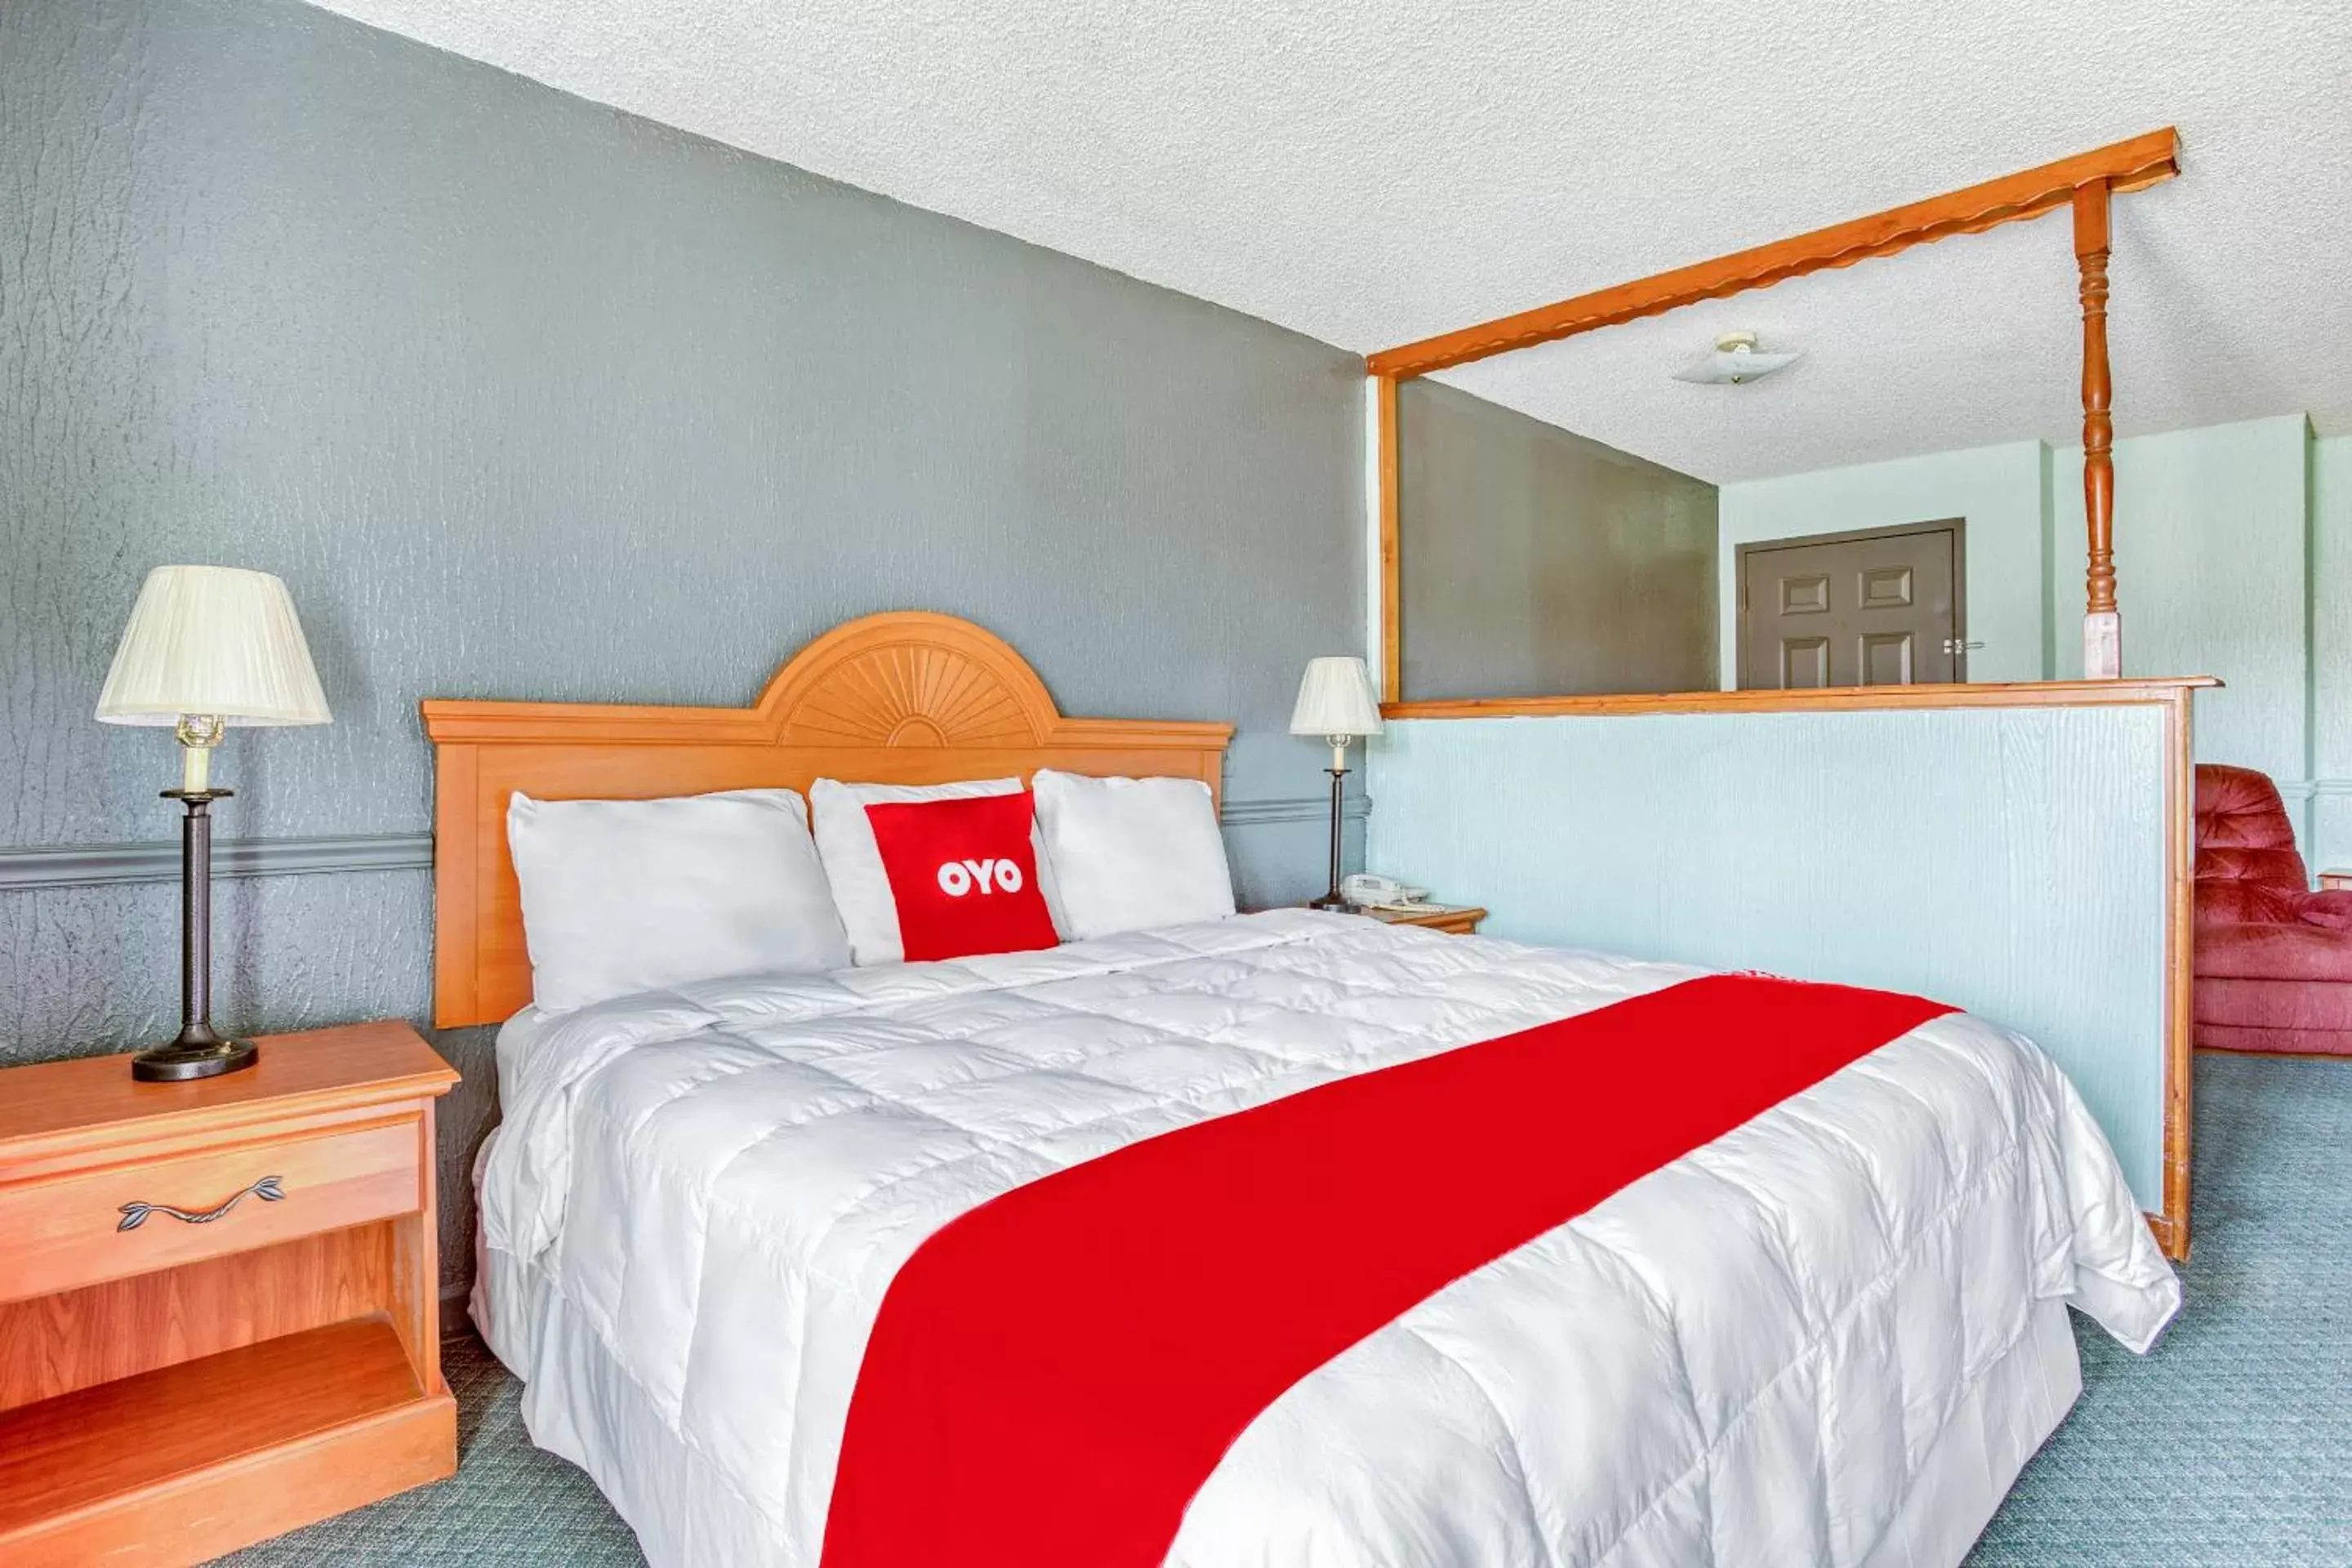 Bedroom, Room Photo in OYO Townhouse Tulsa Woodland Hills